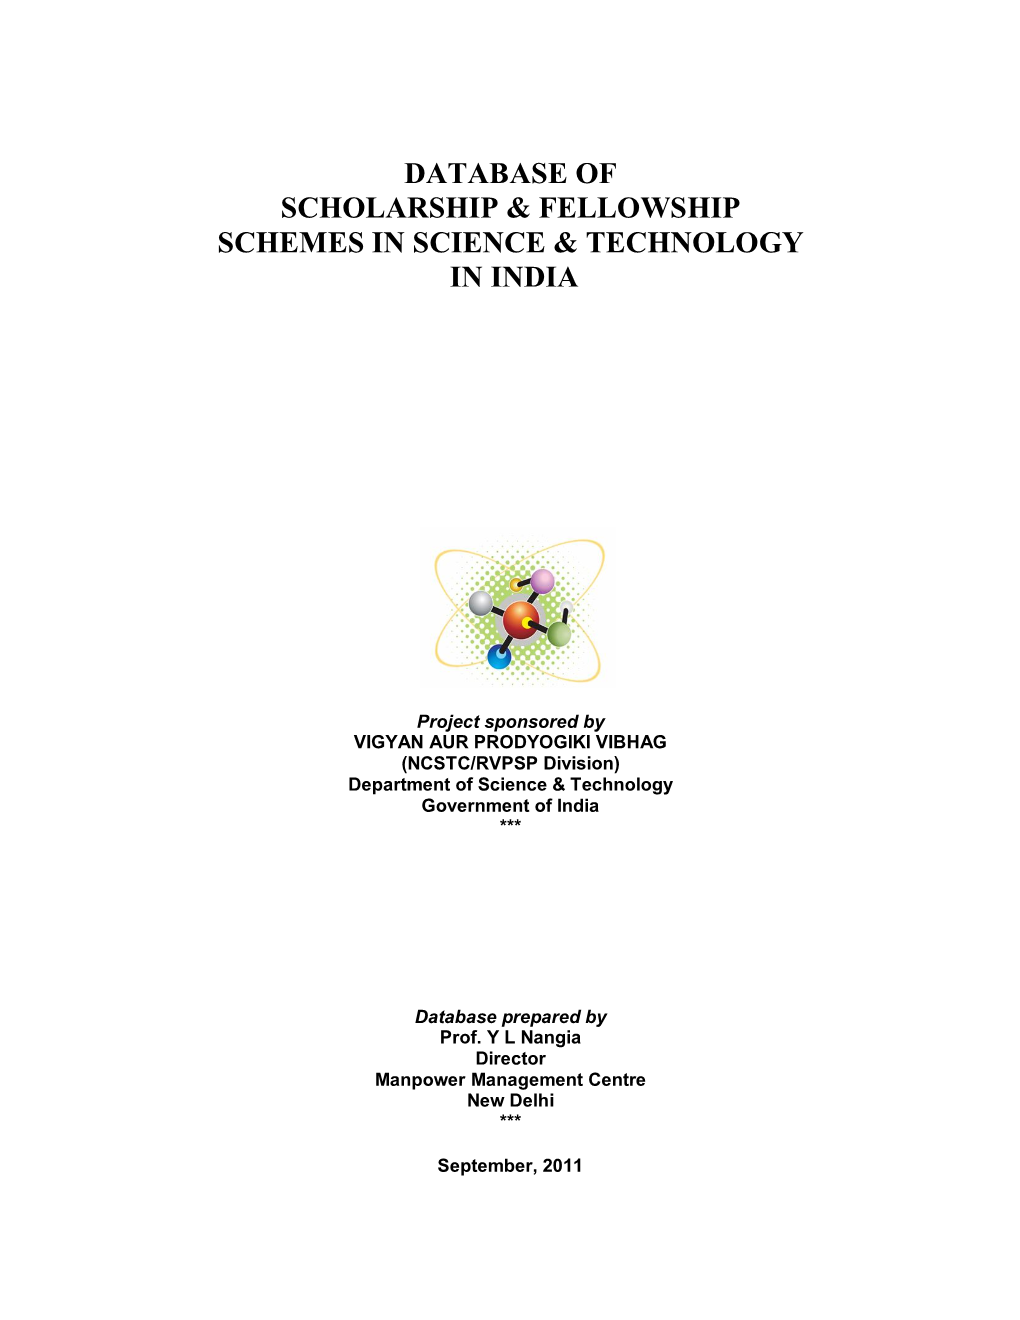 Database of Scholarship & Fellowship Schemes In